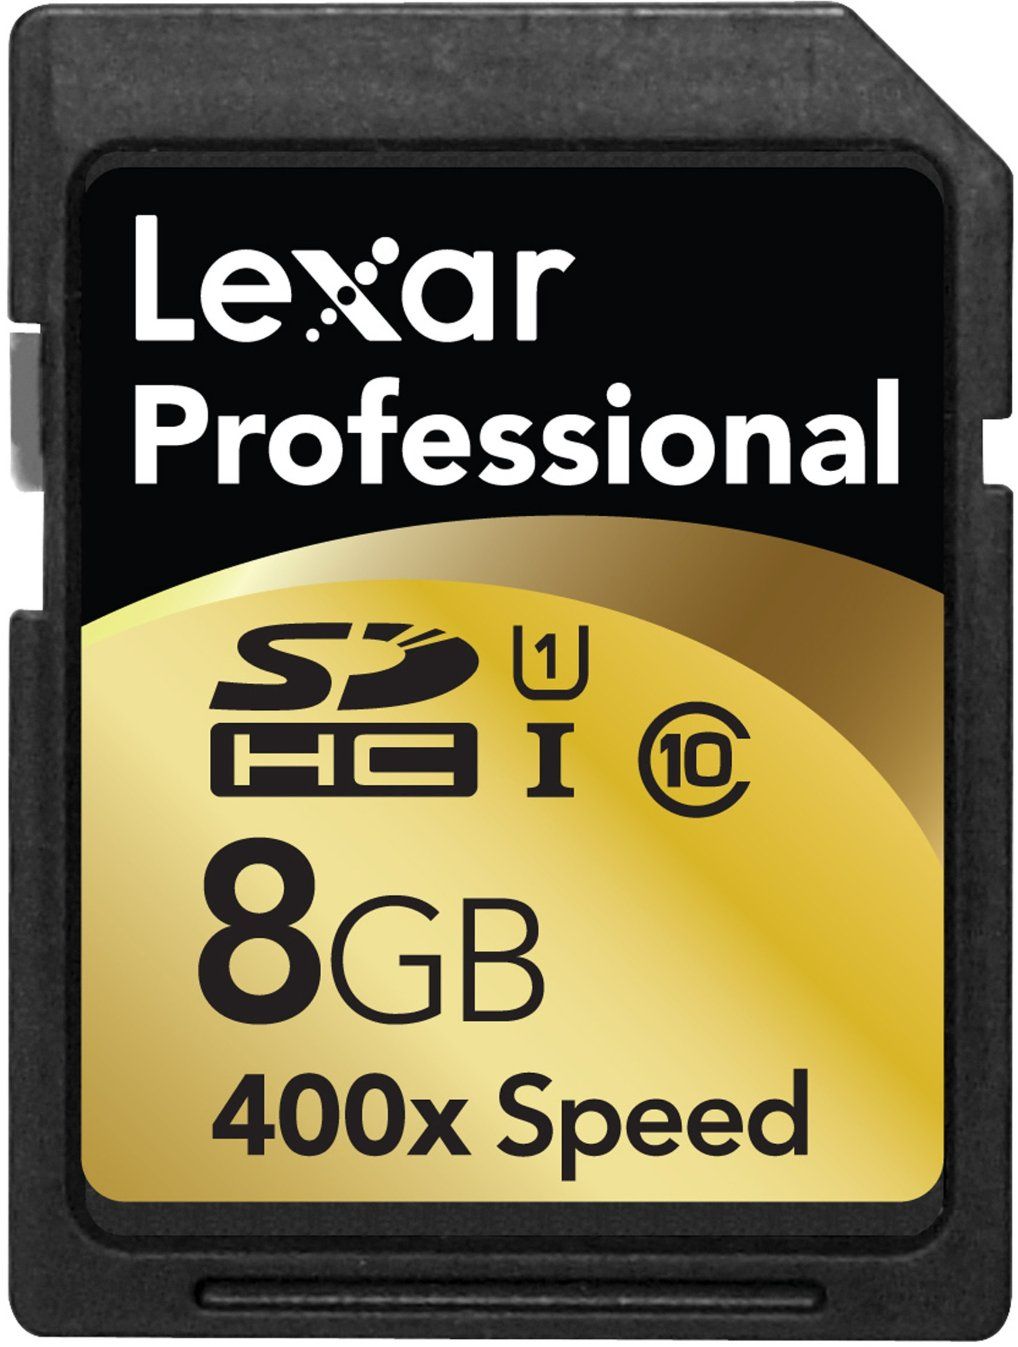 Lexar Professional 400x SDHC UHS-I CLASS 10 - 8GB